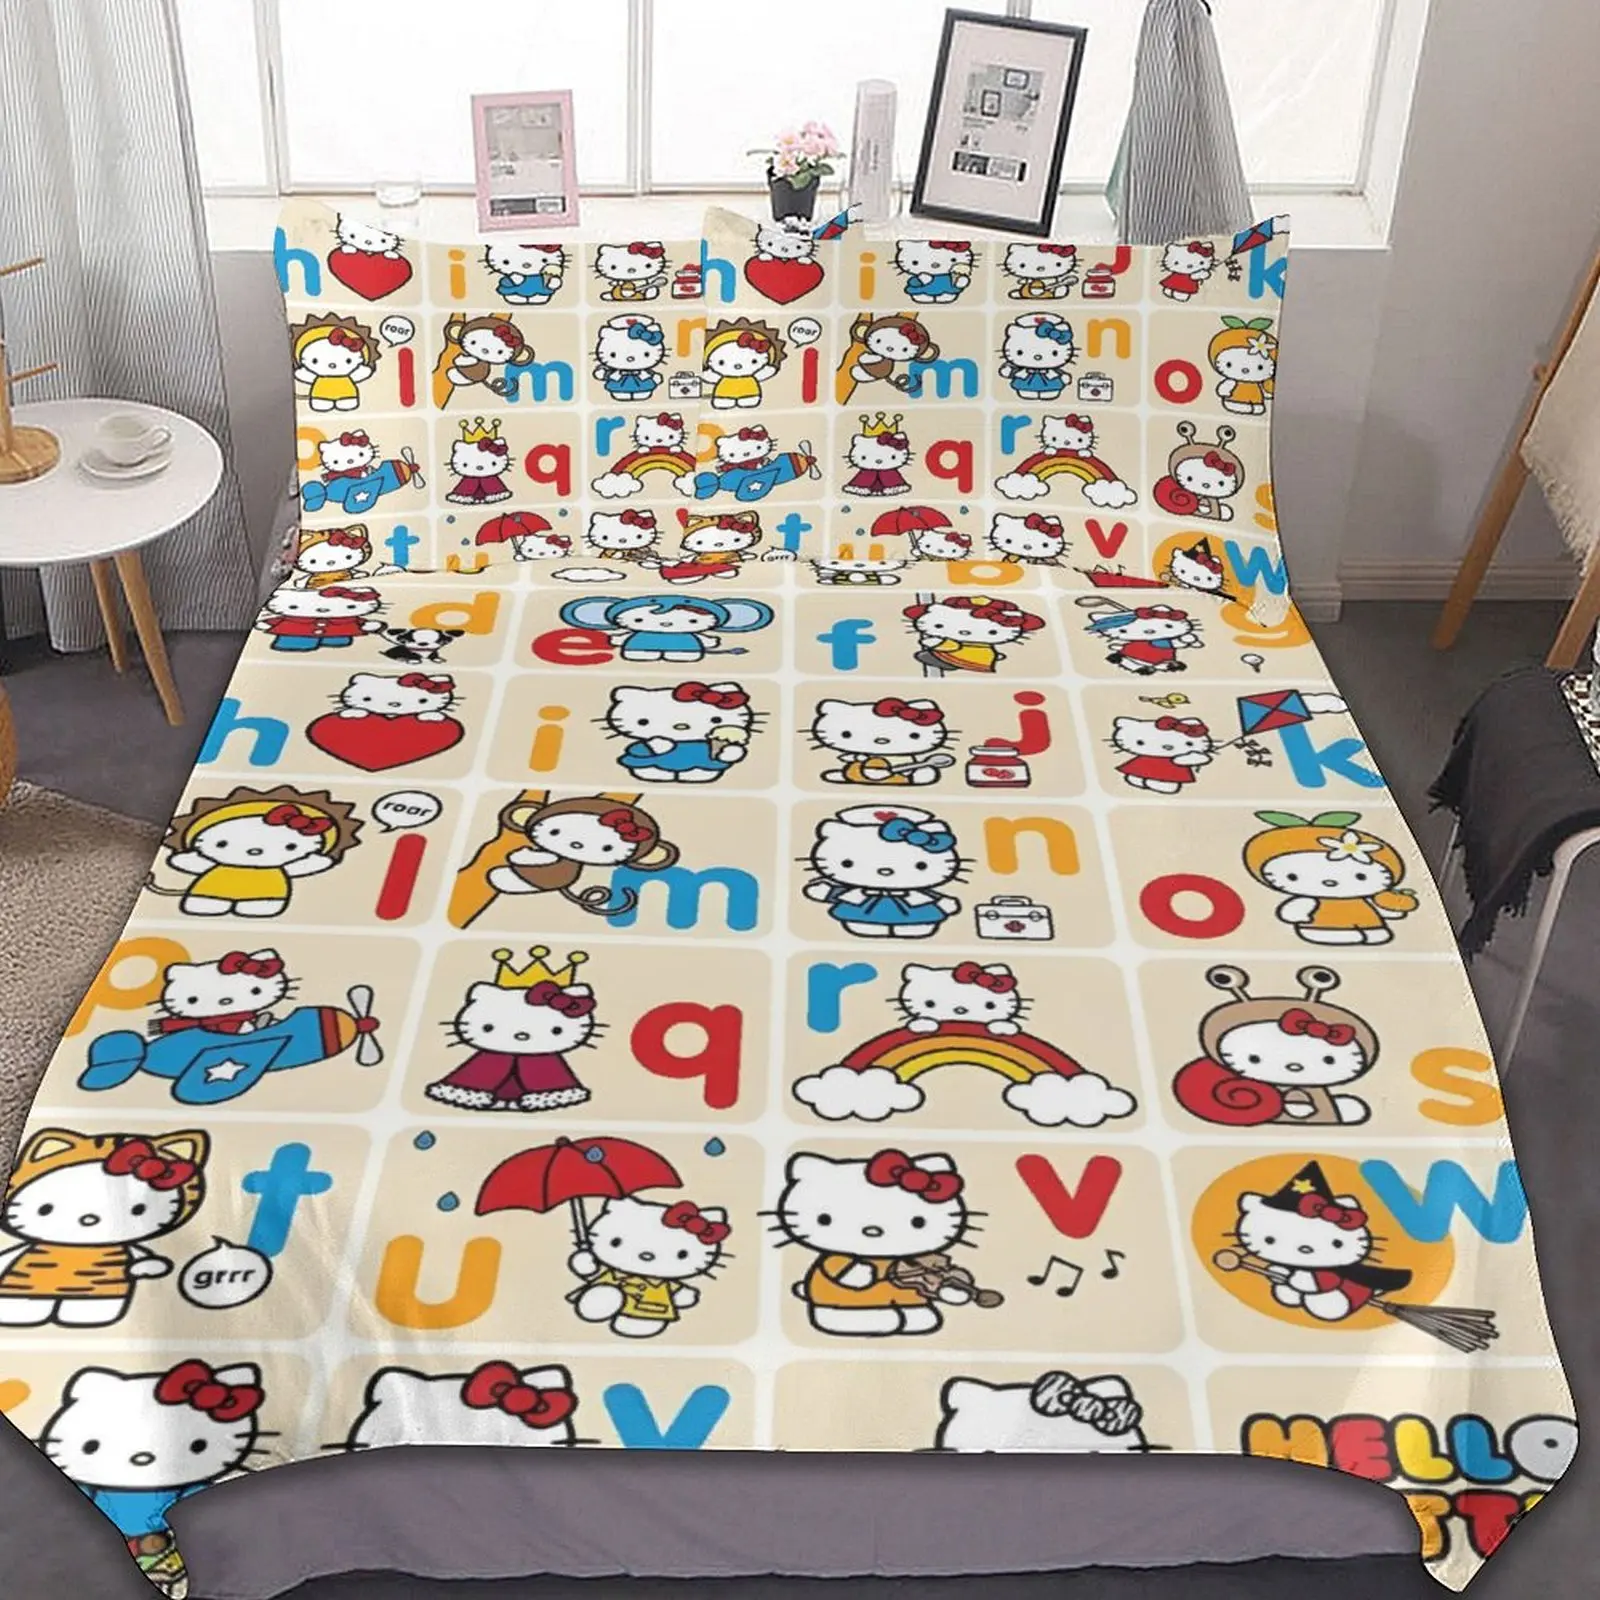 

TAKARA TOMY Sanrio Bedding Set Quilt Hello Kittys Duvet Cover Comforter Pillow Case Bedclothes Children Kid Boy Bed Bedroom Set